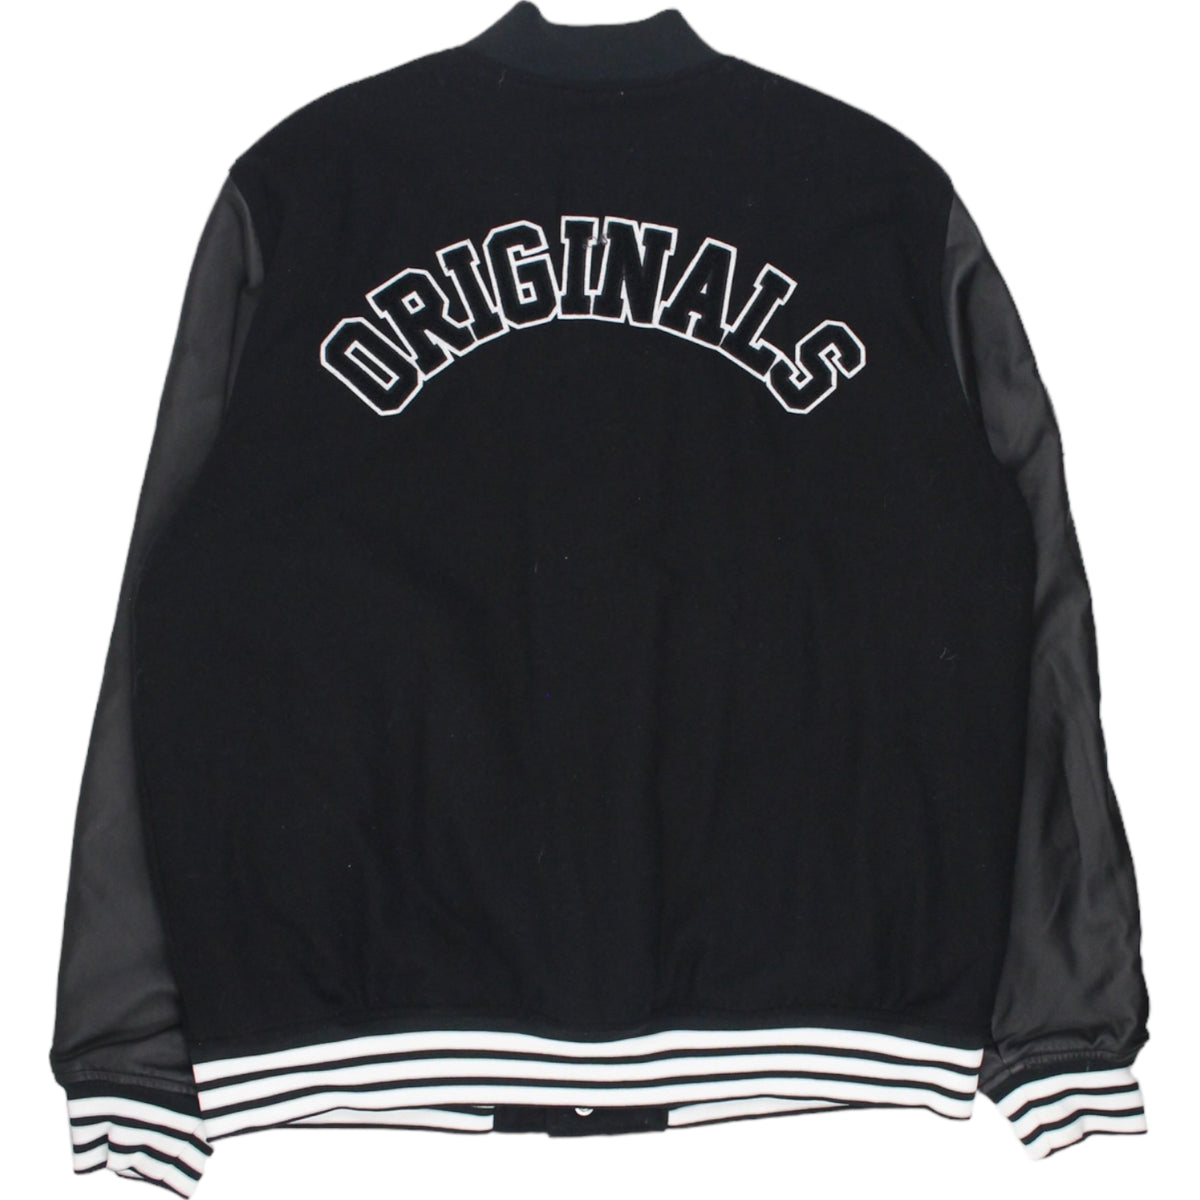 Adidas Originals Black 72 Varsity Jacket